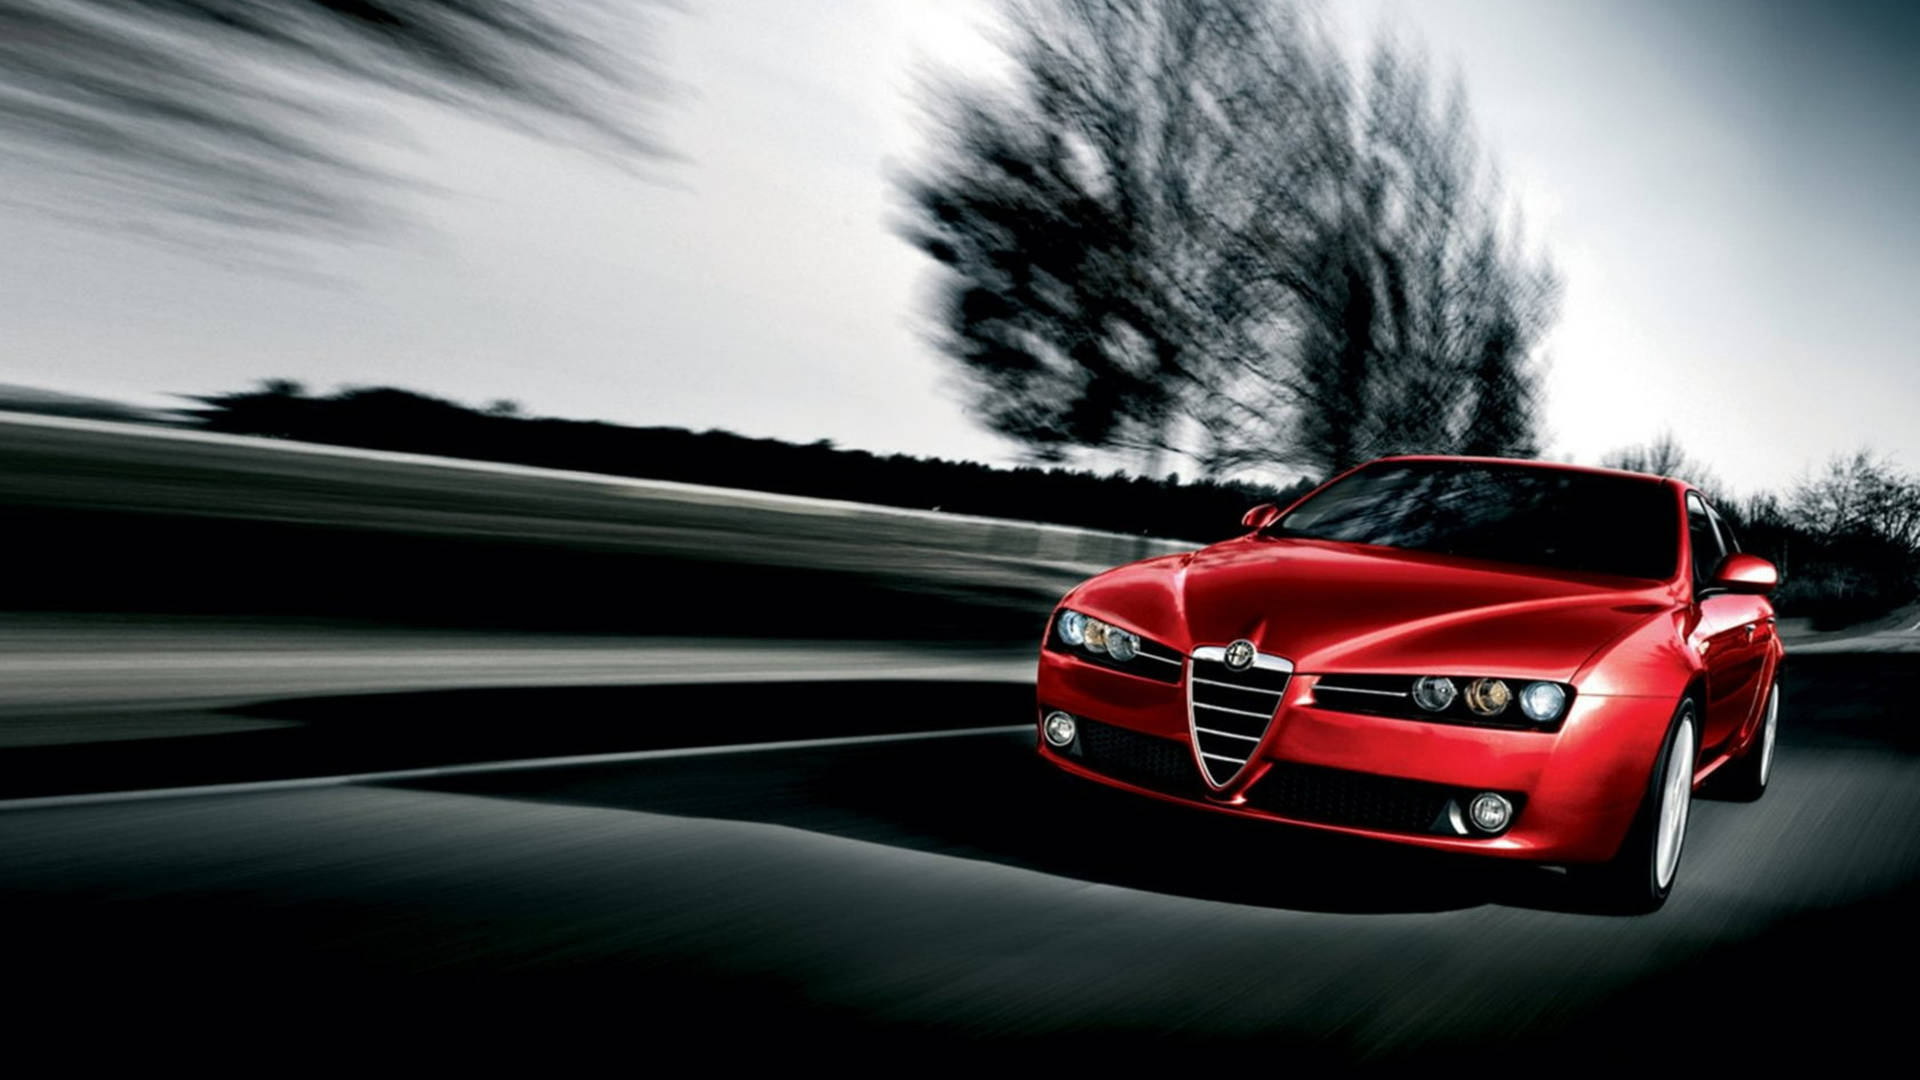 Speeding Red Alfa Romeo 159 Wallpaper